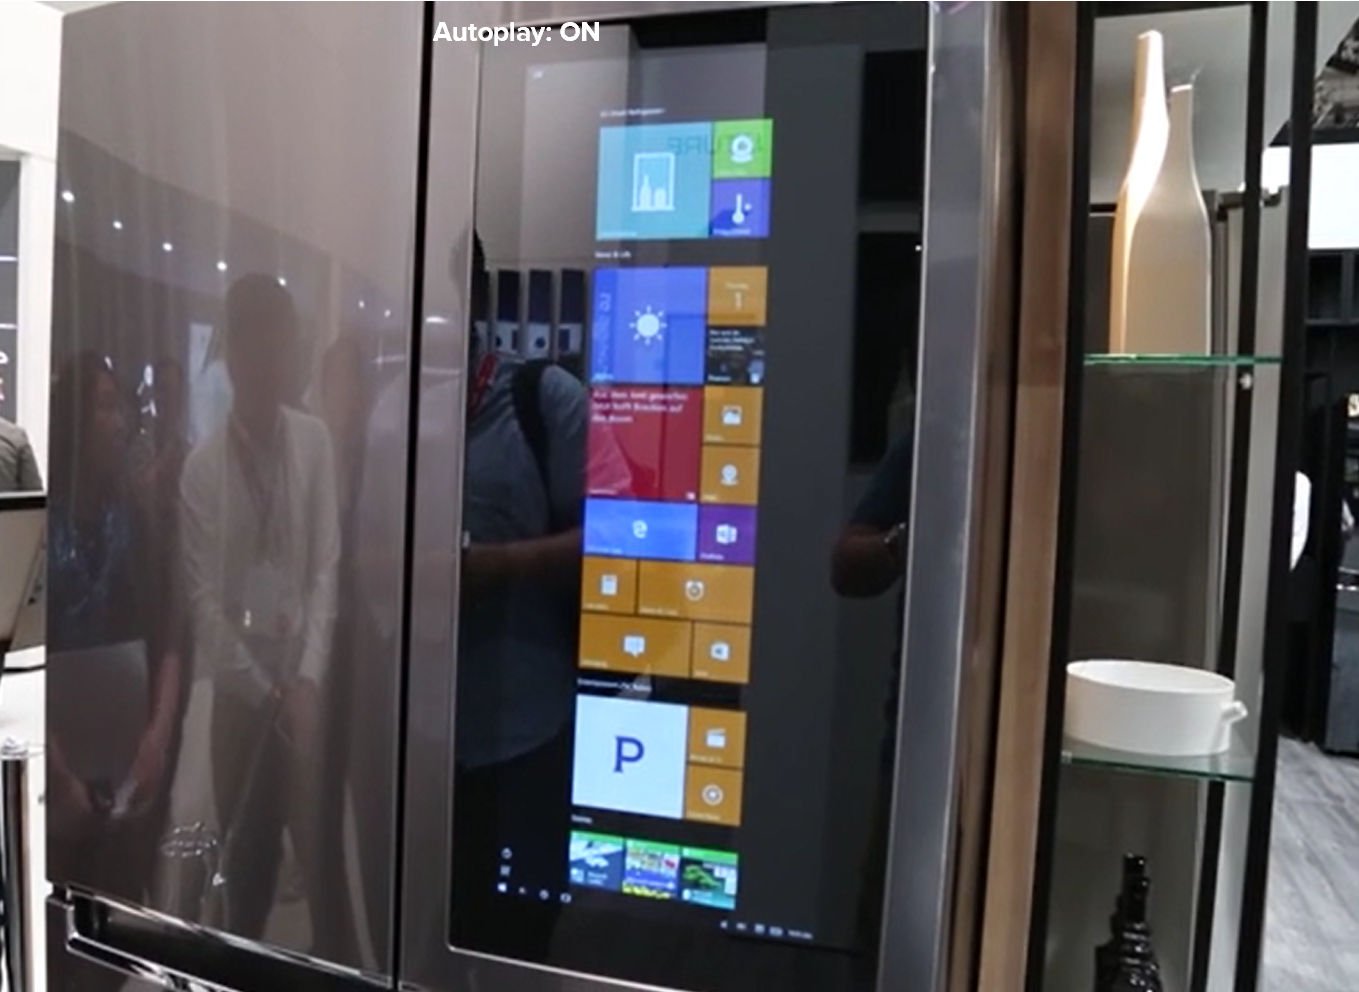 LG’s Windows 10 powered Smart Instaview fridge still kicking around